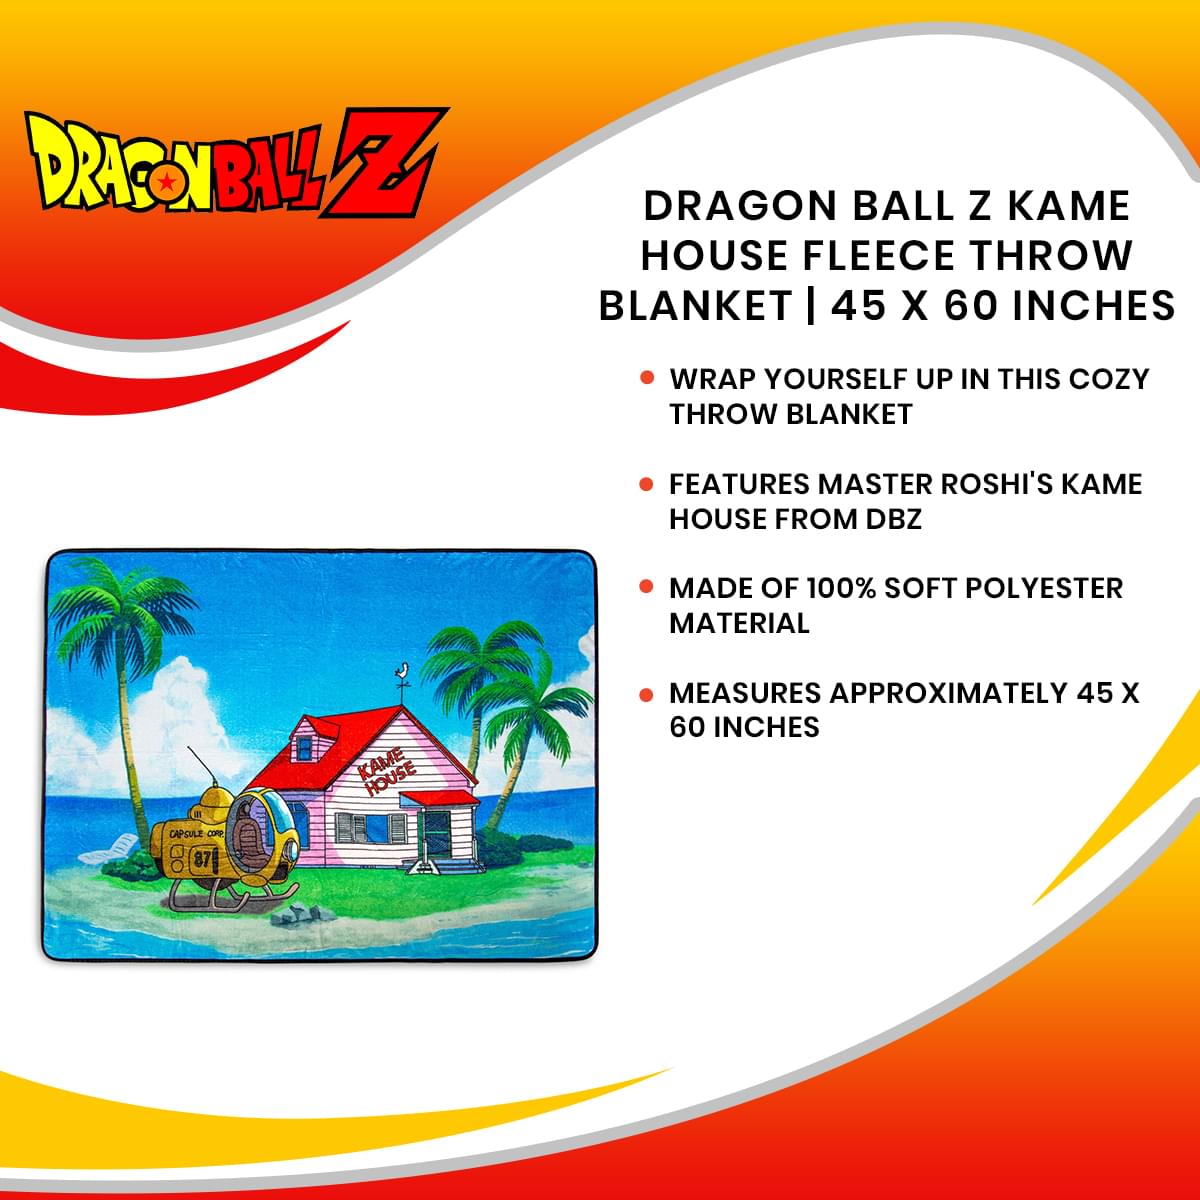 Dragon Ball Z Kame House Fleece Throw Blanket | 45 x 60 Inches